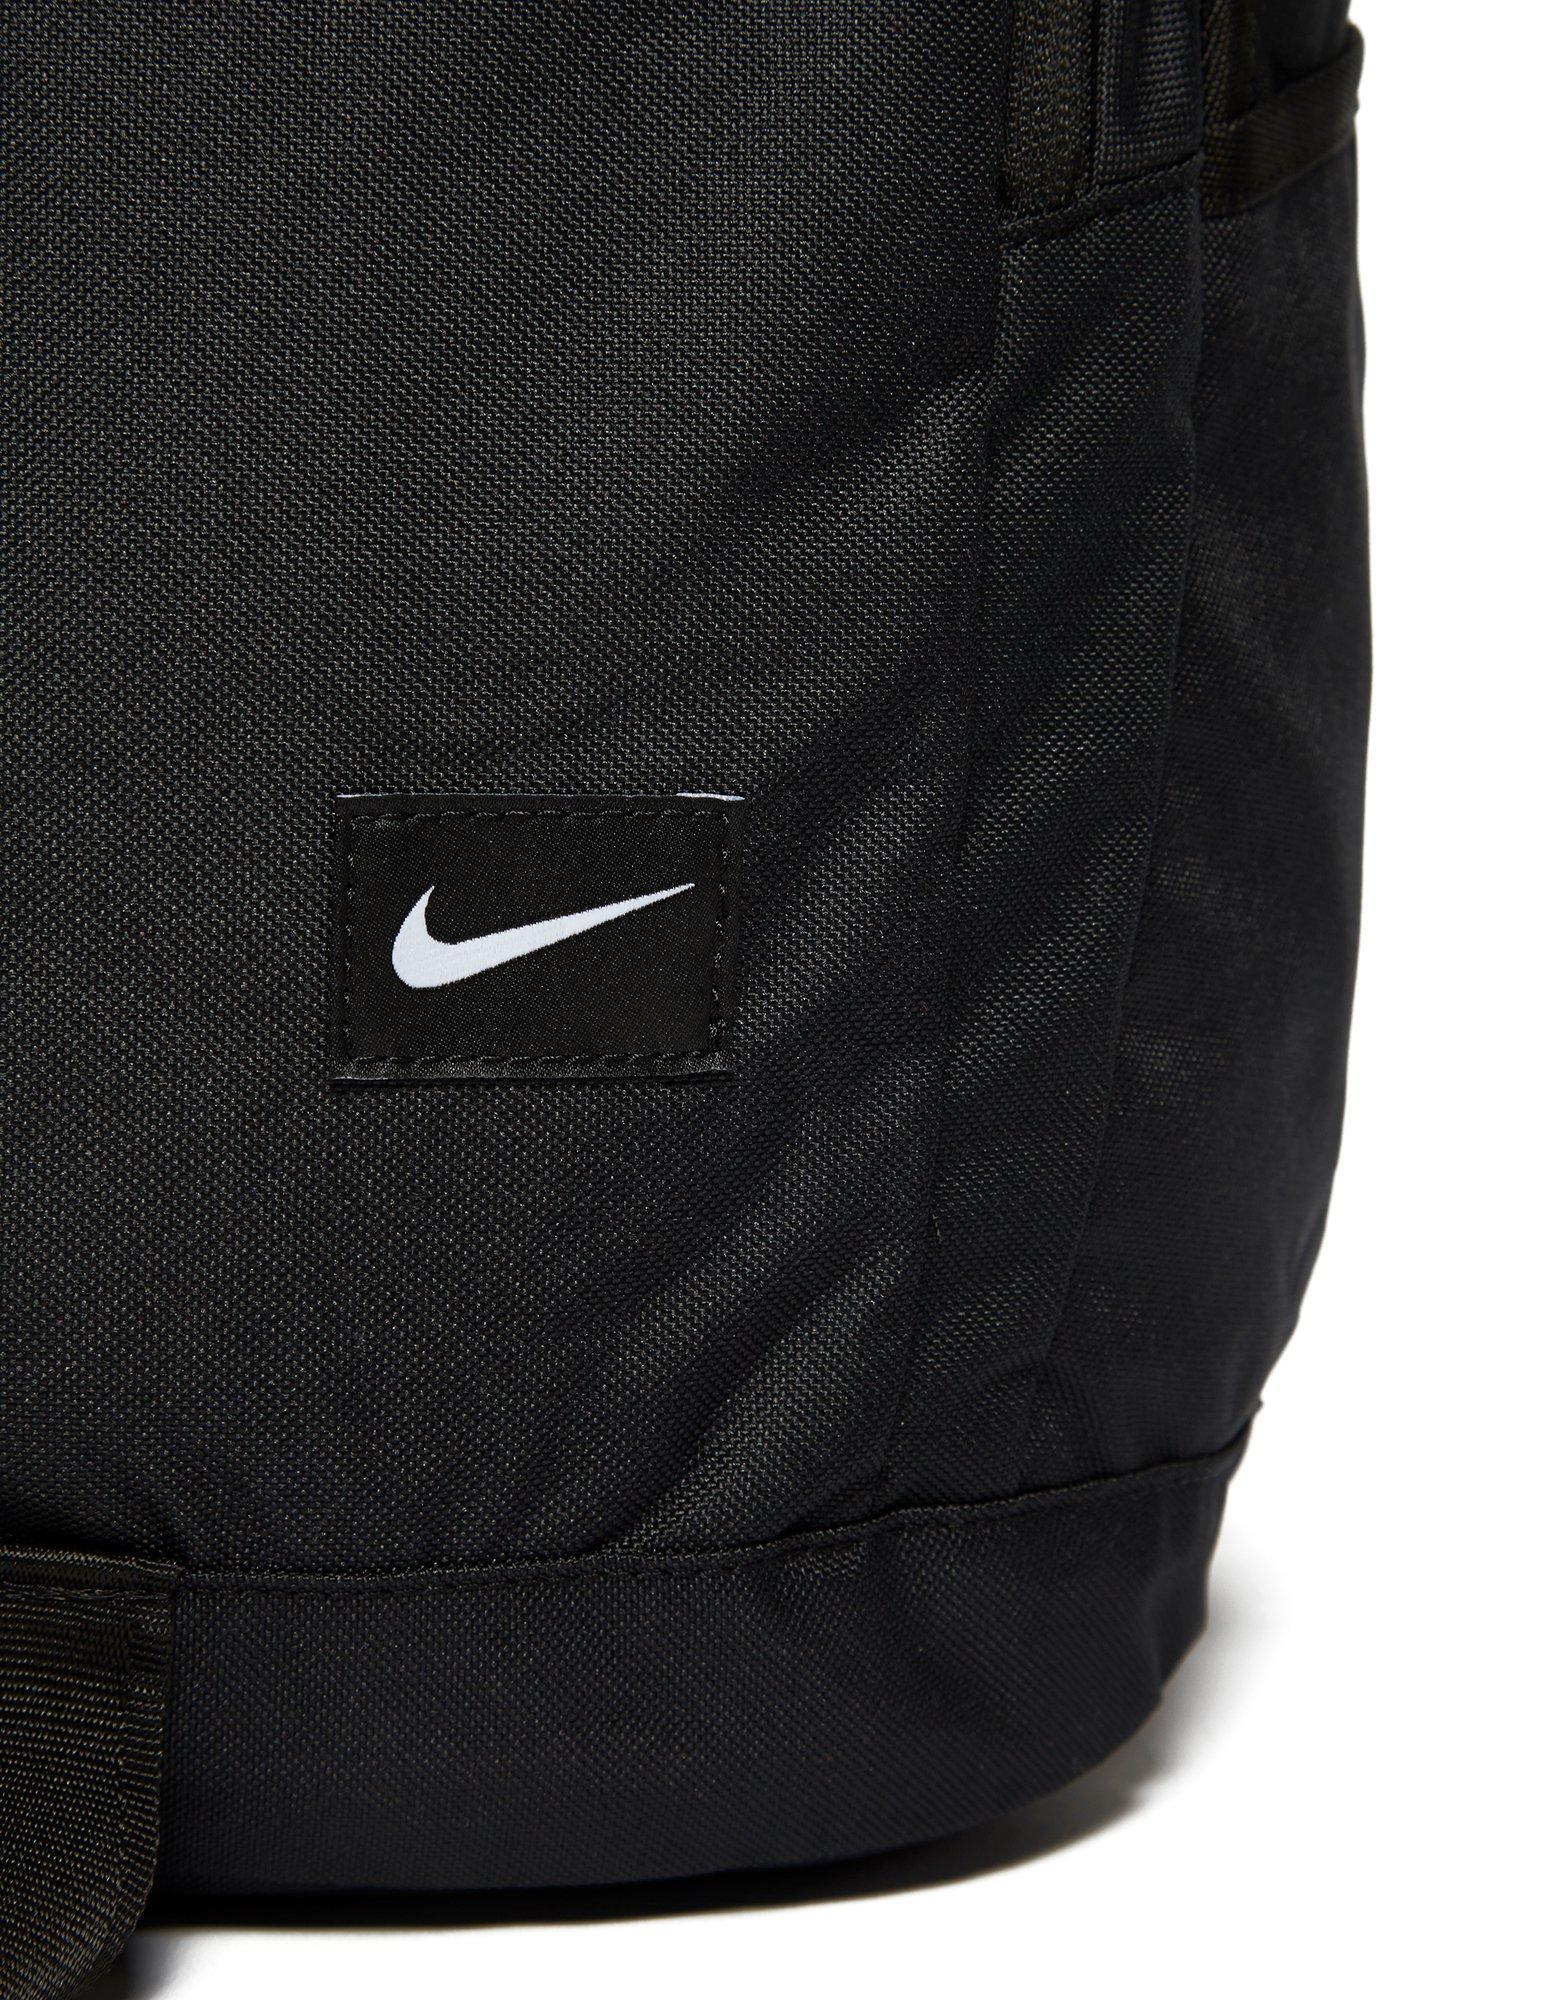 Nike Soleday Backpack in Black for Men - Lyst